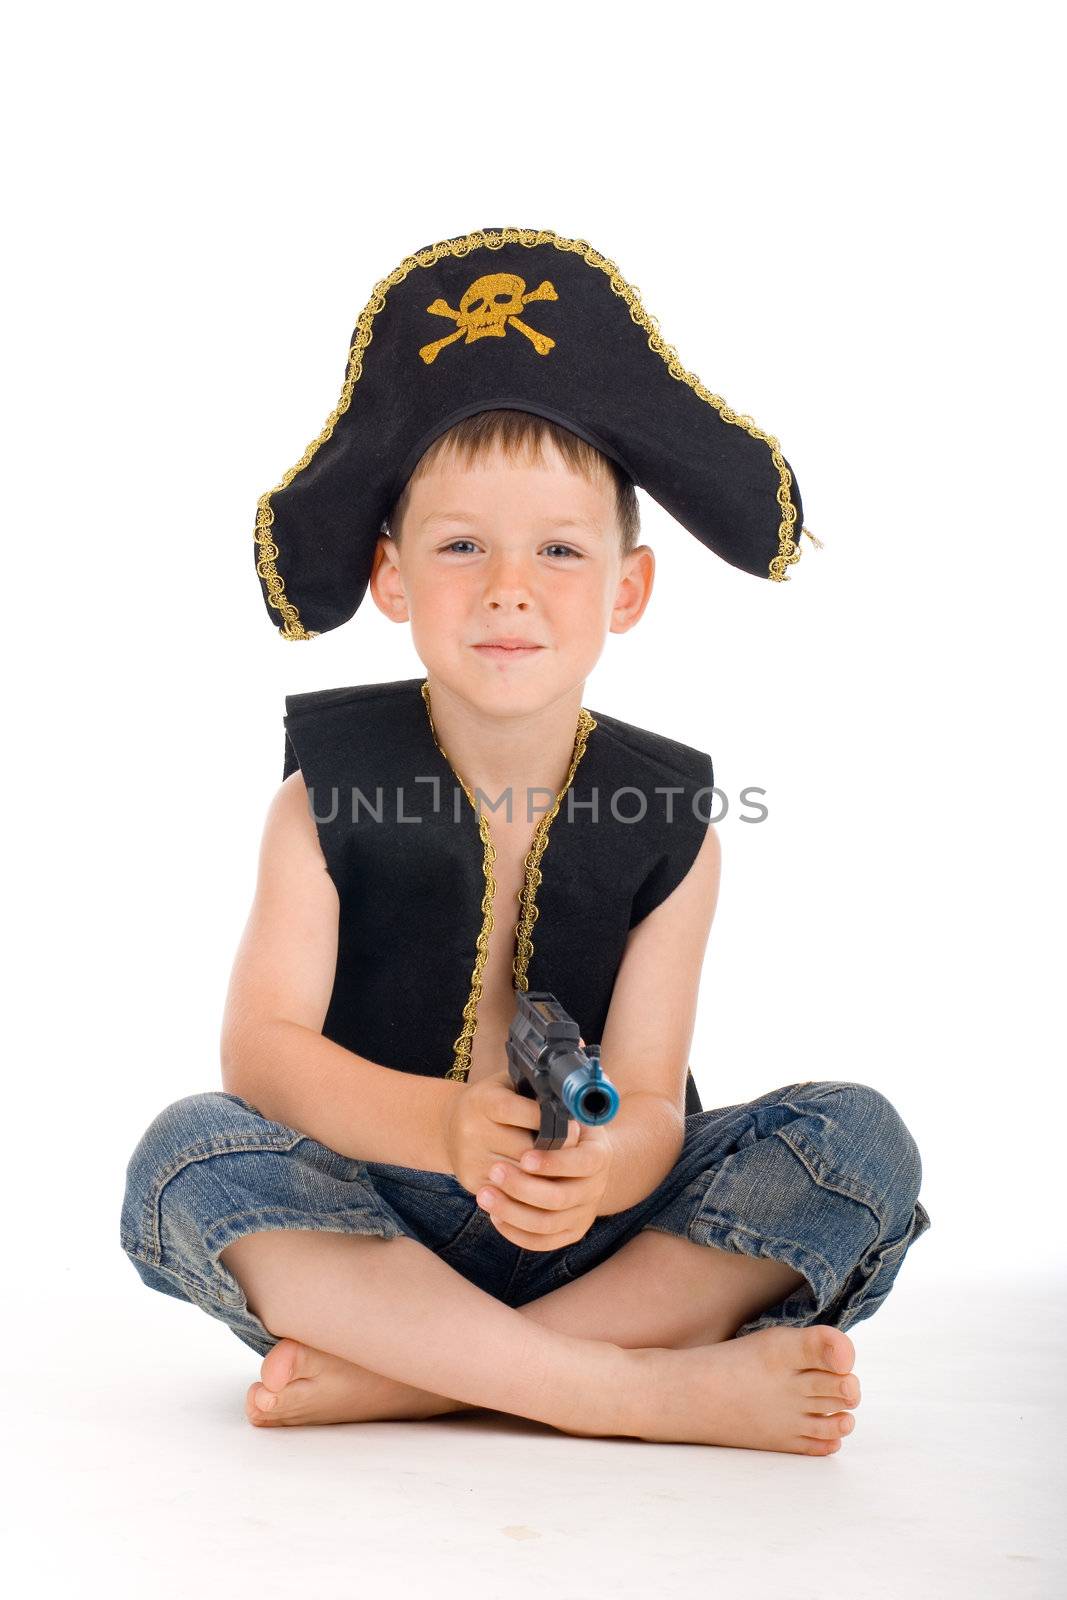 Sitting pirate boy on isolated white background